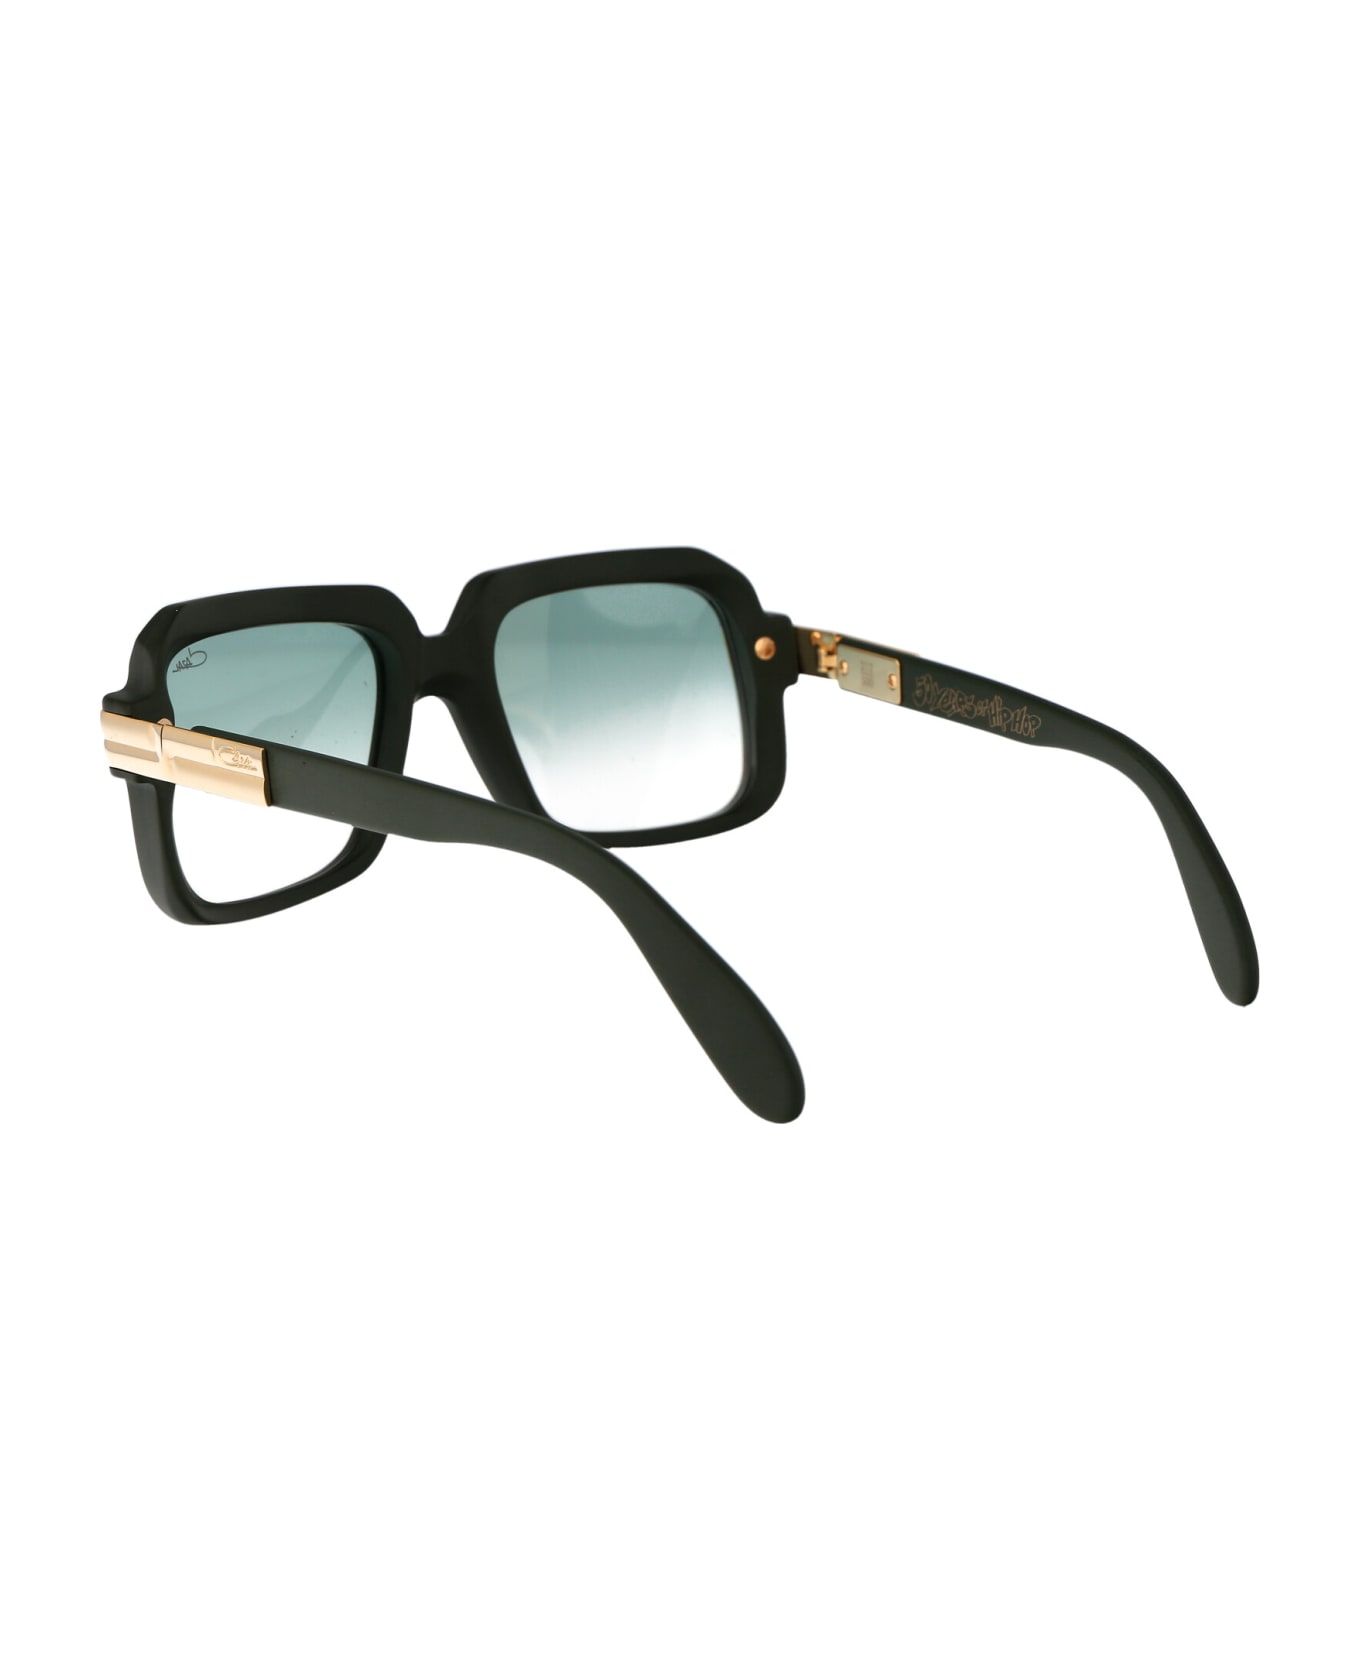 Cazal Mod. 607/3 Sunglasses - 050 GREEN